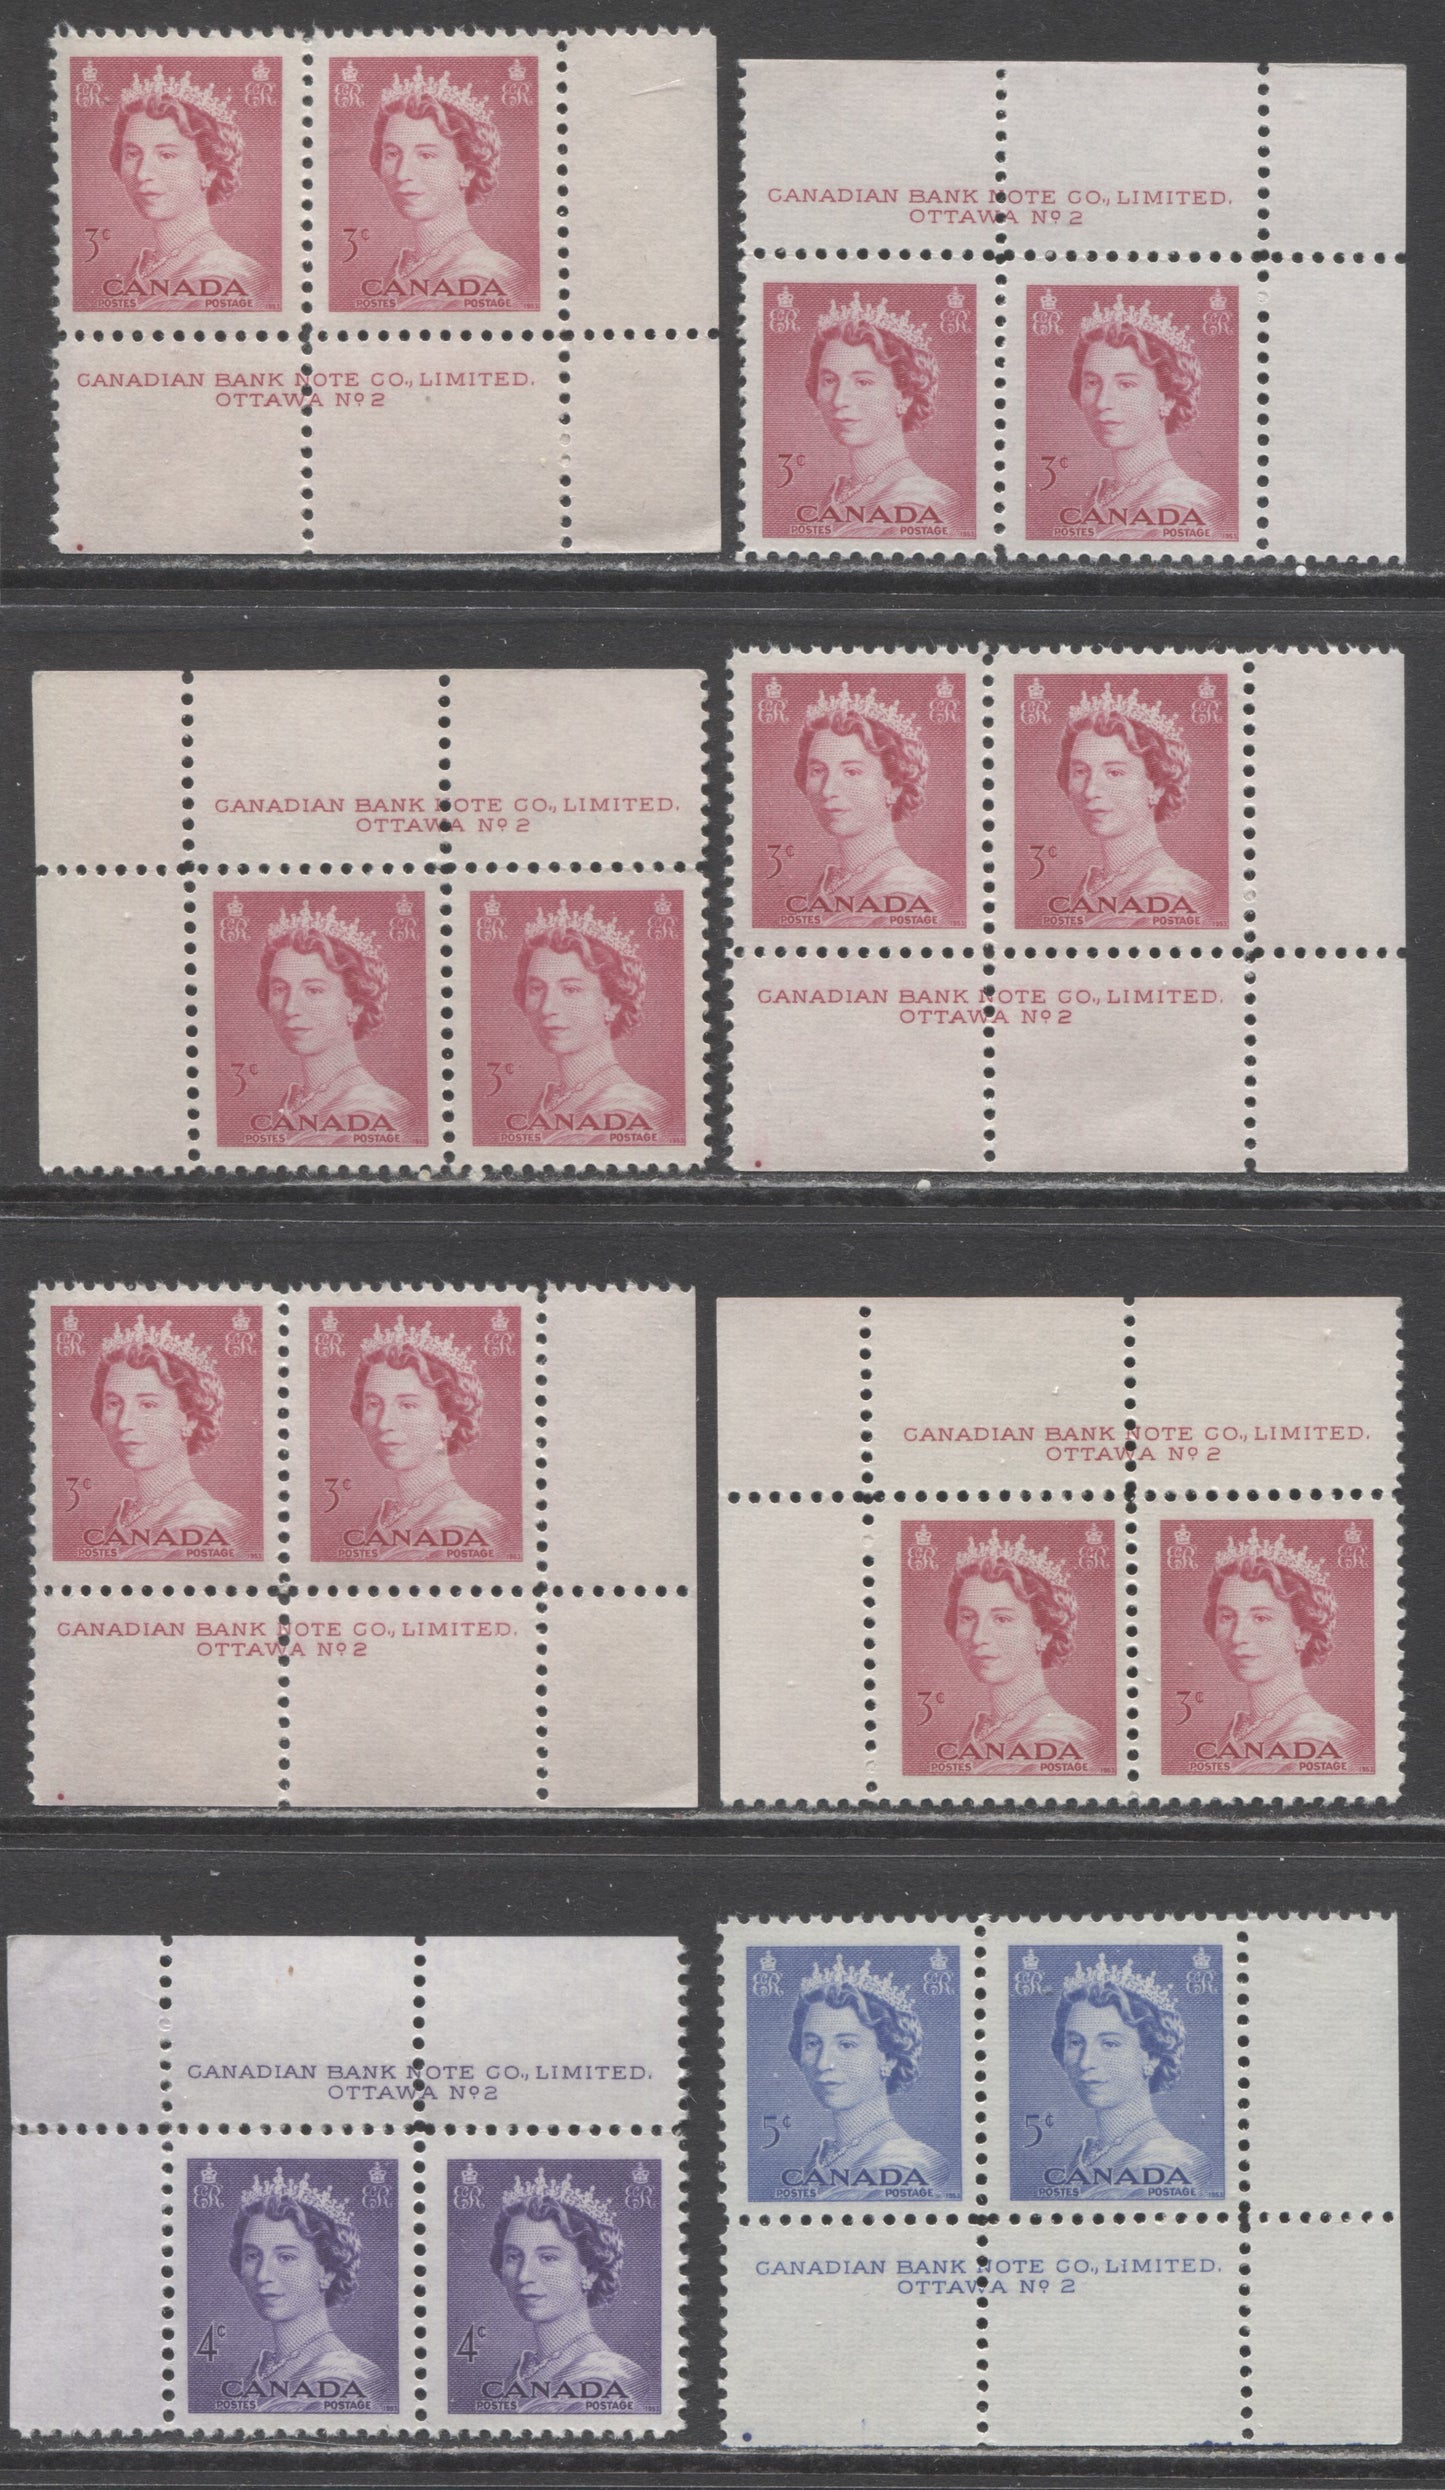 Lot 254 Canada #327-329 3c-5c Cerise, Violet & Ultramarine Queen Elizabeth II, 1953-1954 Karsh Issue, 8 VFNH Plate 2 Inscription Pairs, Different Perfs